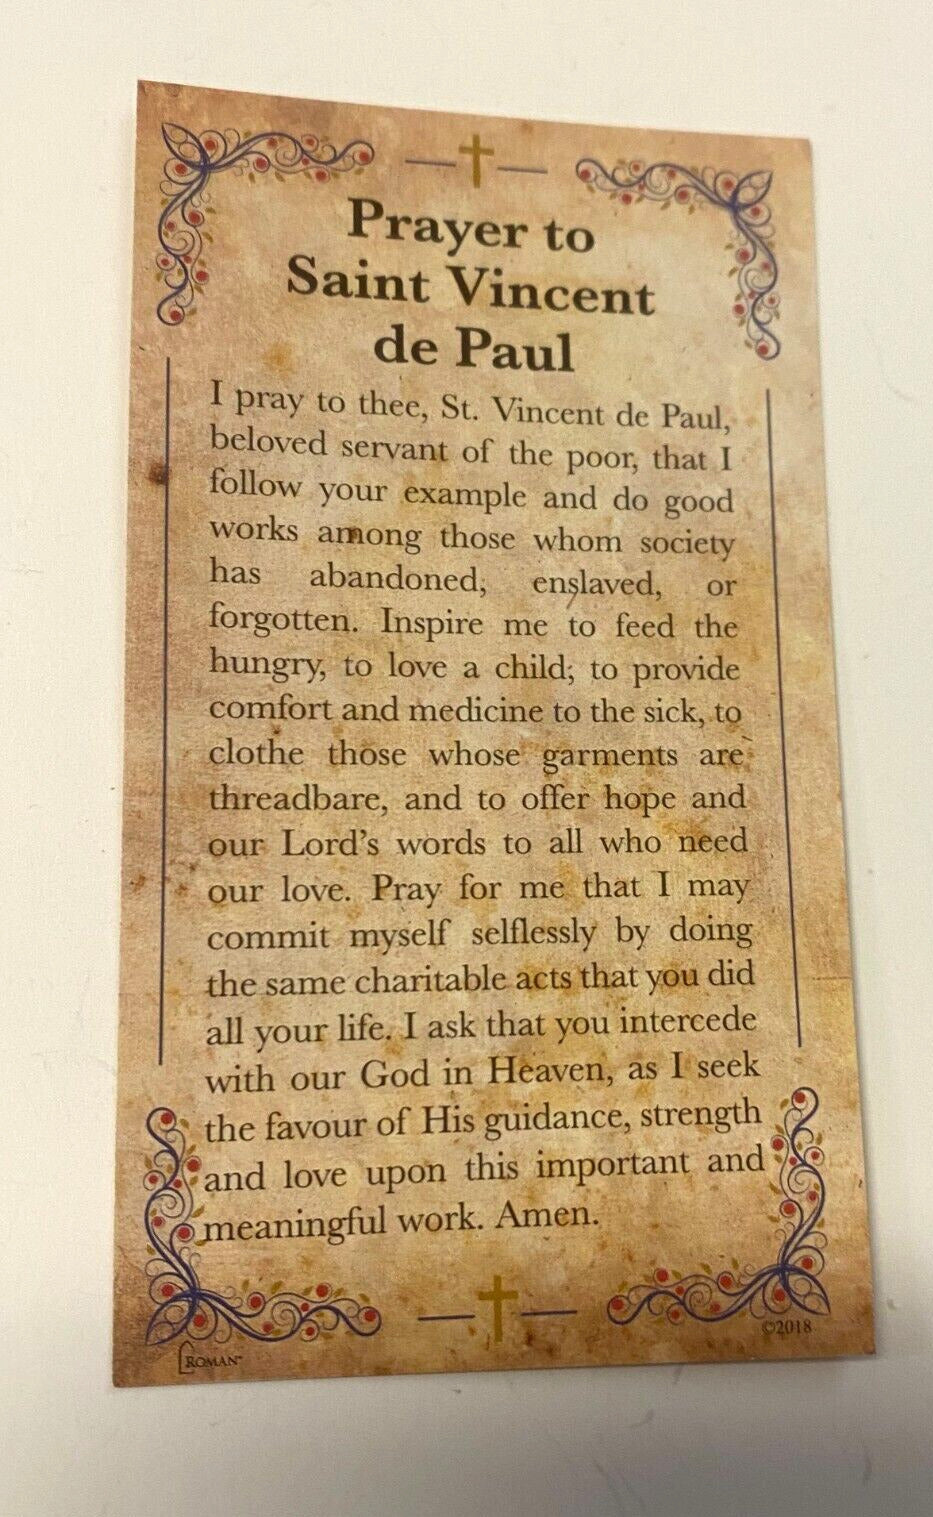 Saint Vincent de Paul 3.5" H Statue, + Biography & Prayer Card, New - Bob and Penny Lord